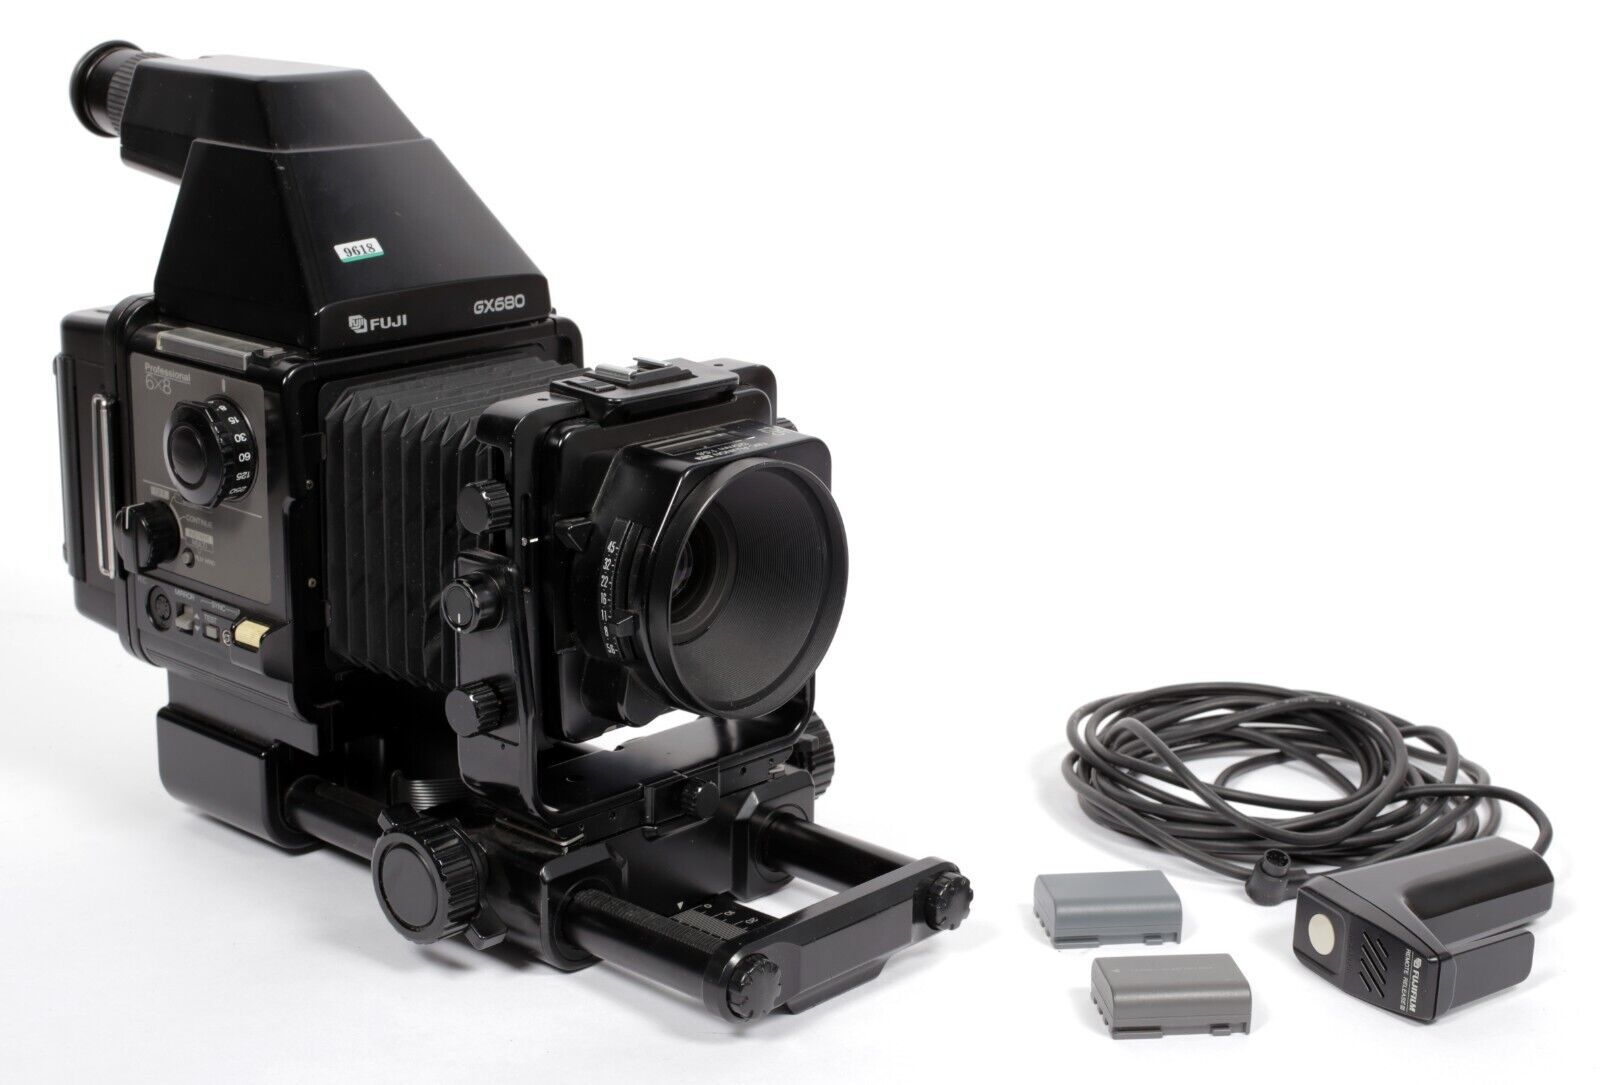 Fuji GX680 6X8 technical medium format camera with 125mm F5.6 EBC 